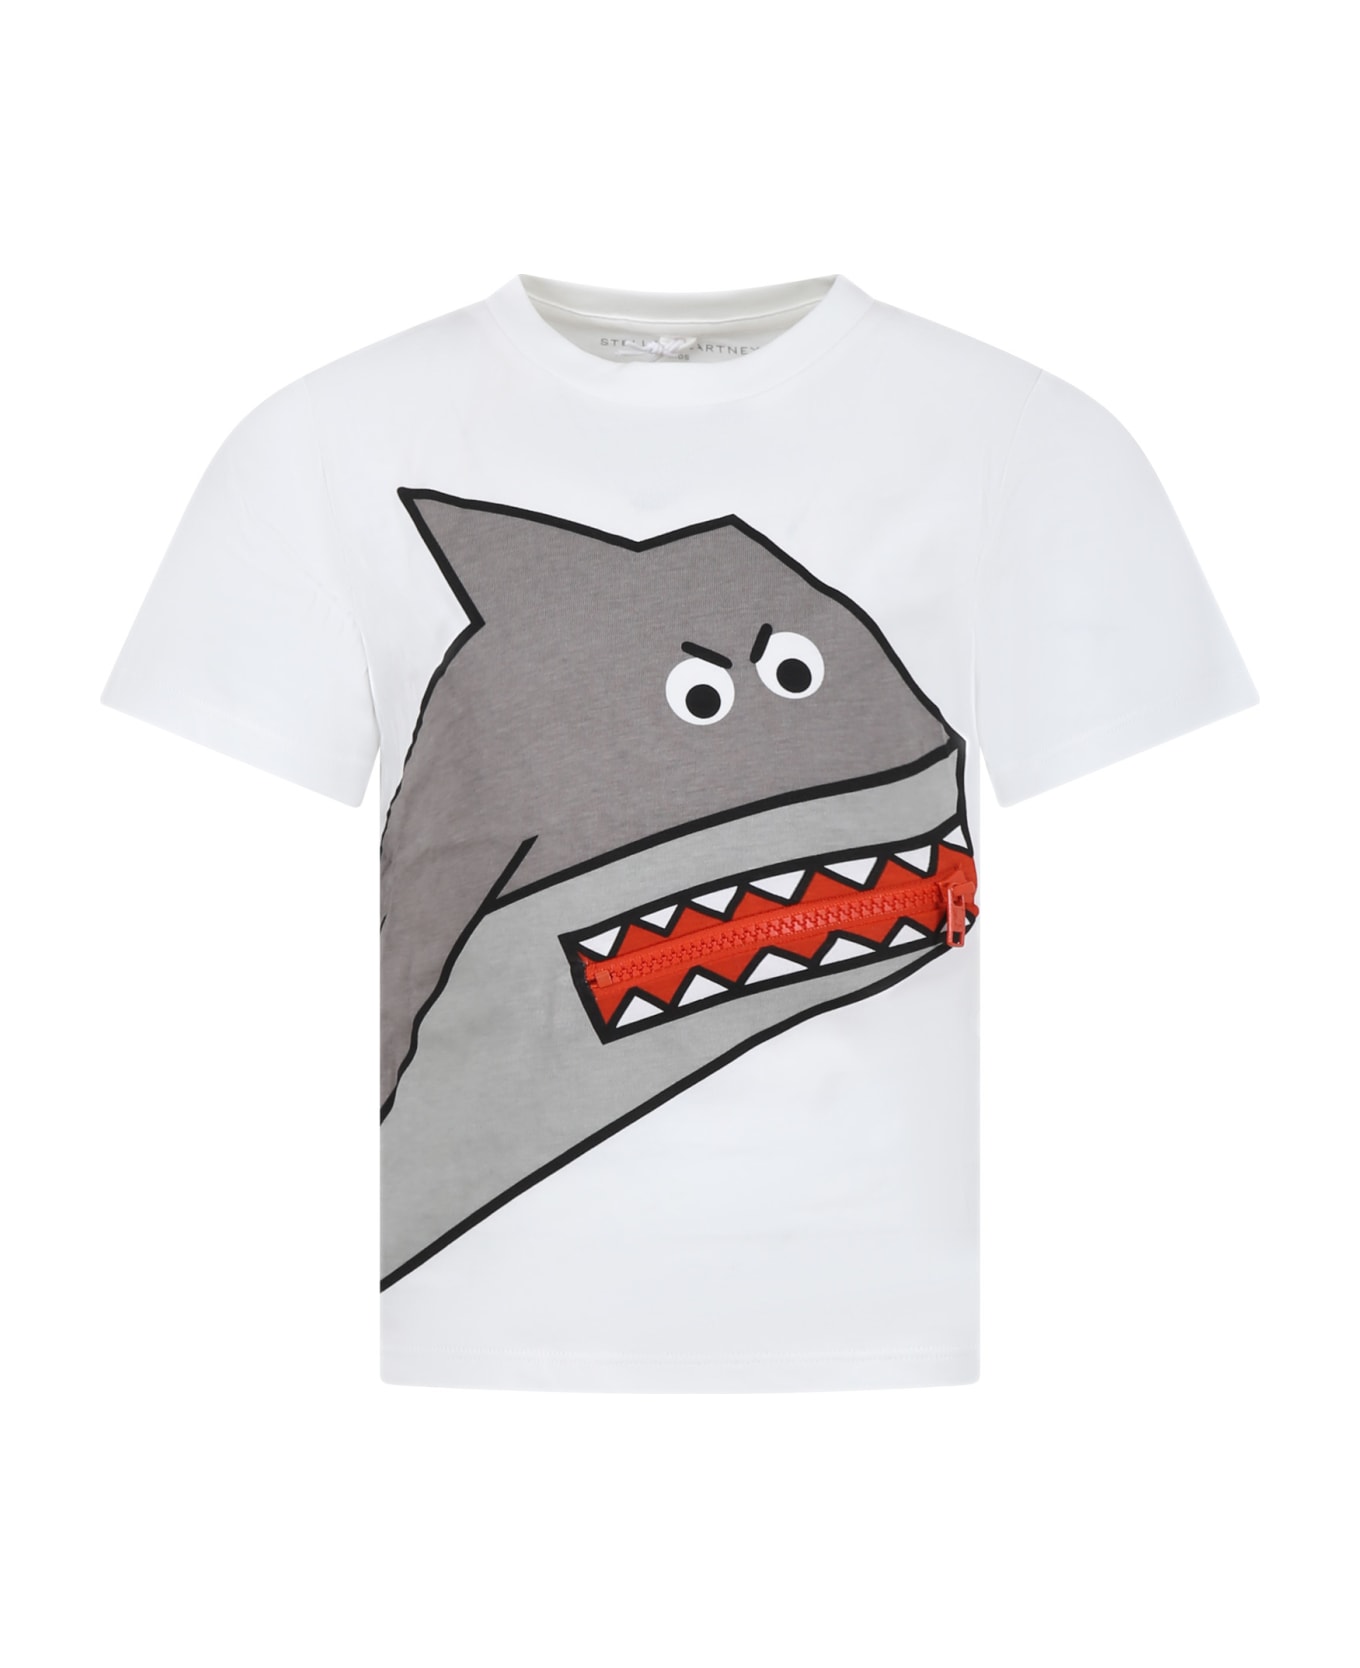 Stella McCartney White T-shirt For Boy With Shark - Avorio